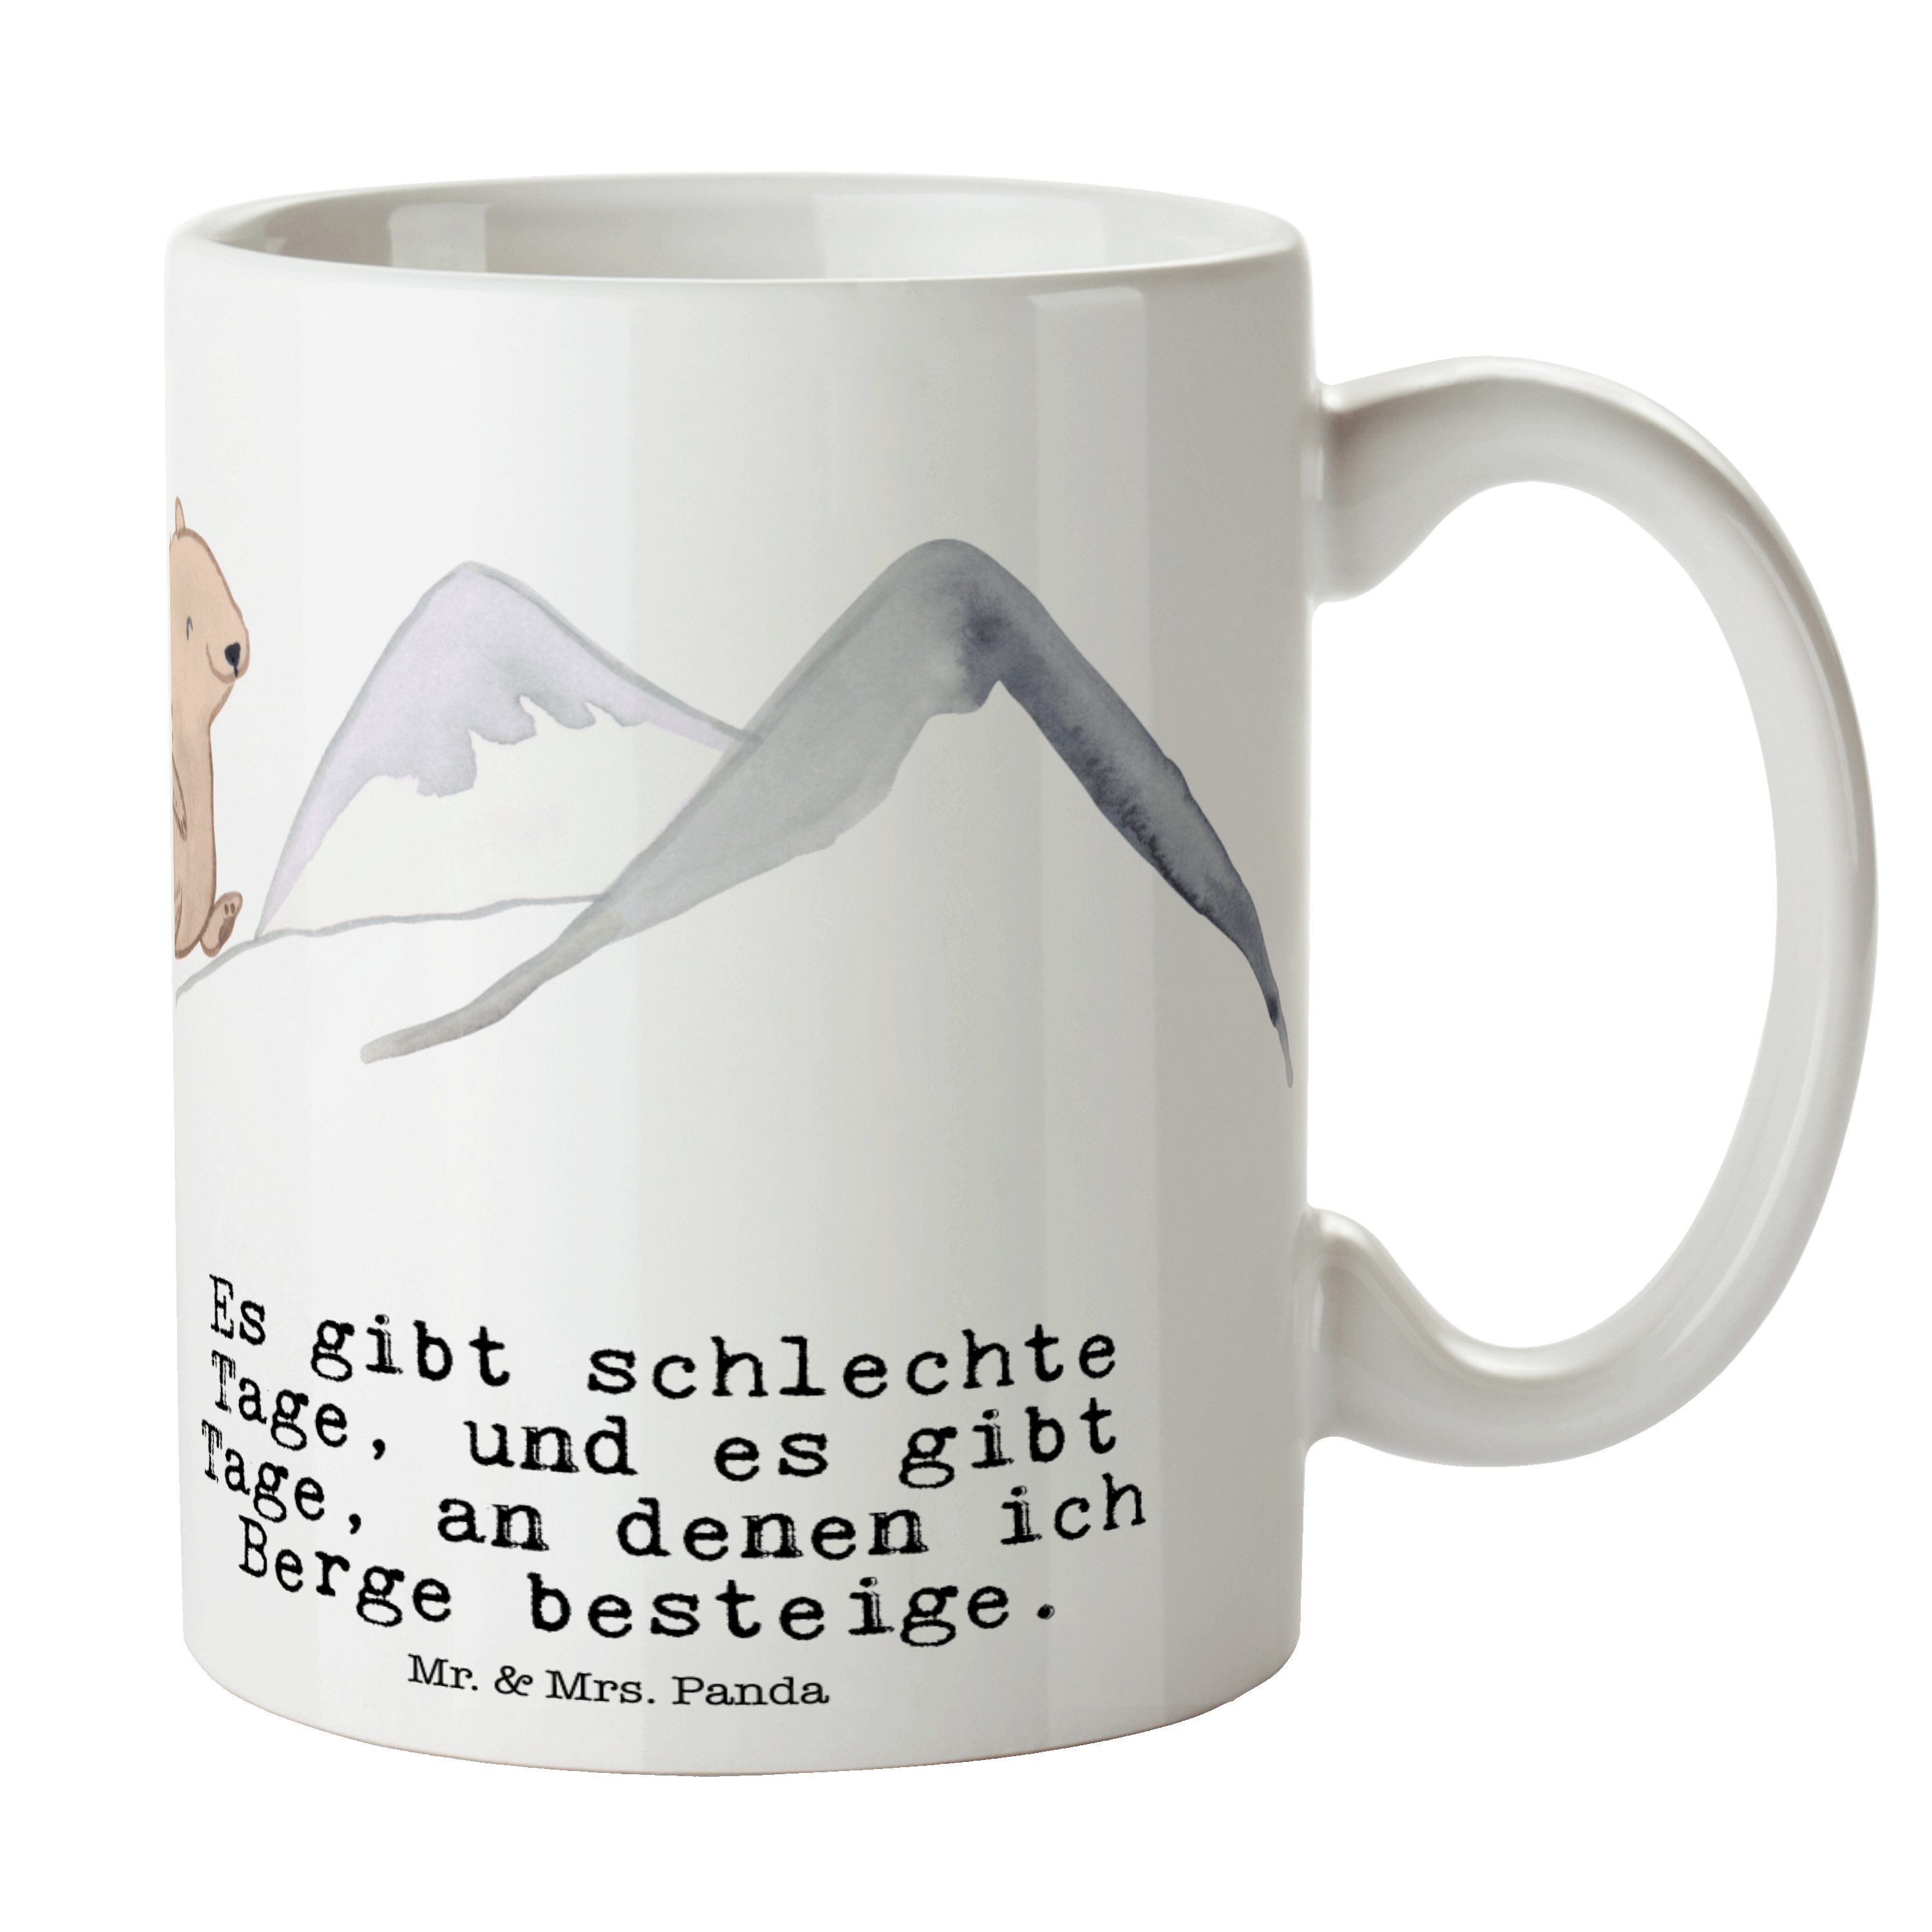 Mr. & Bär - Mrs. Geschenk, - Weiß Bergsteigen Panda Tasse Keramik Keramiktasse, Sportart, Tage wande